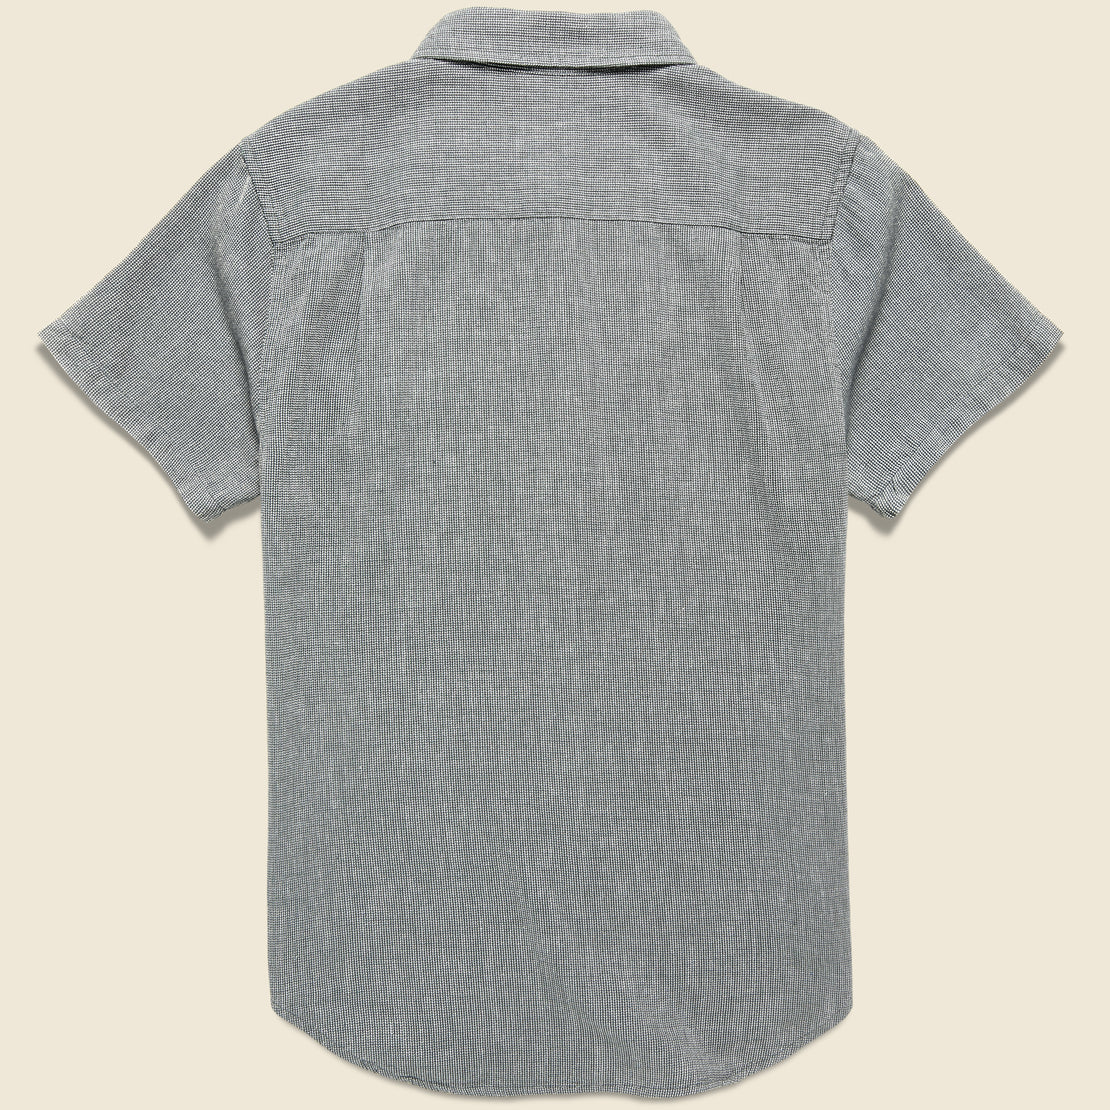 Marten Shirt - Grey Chevron - Bridge & Burn - STAG Provisions - Tops - S/S Woven - Solid